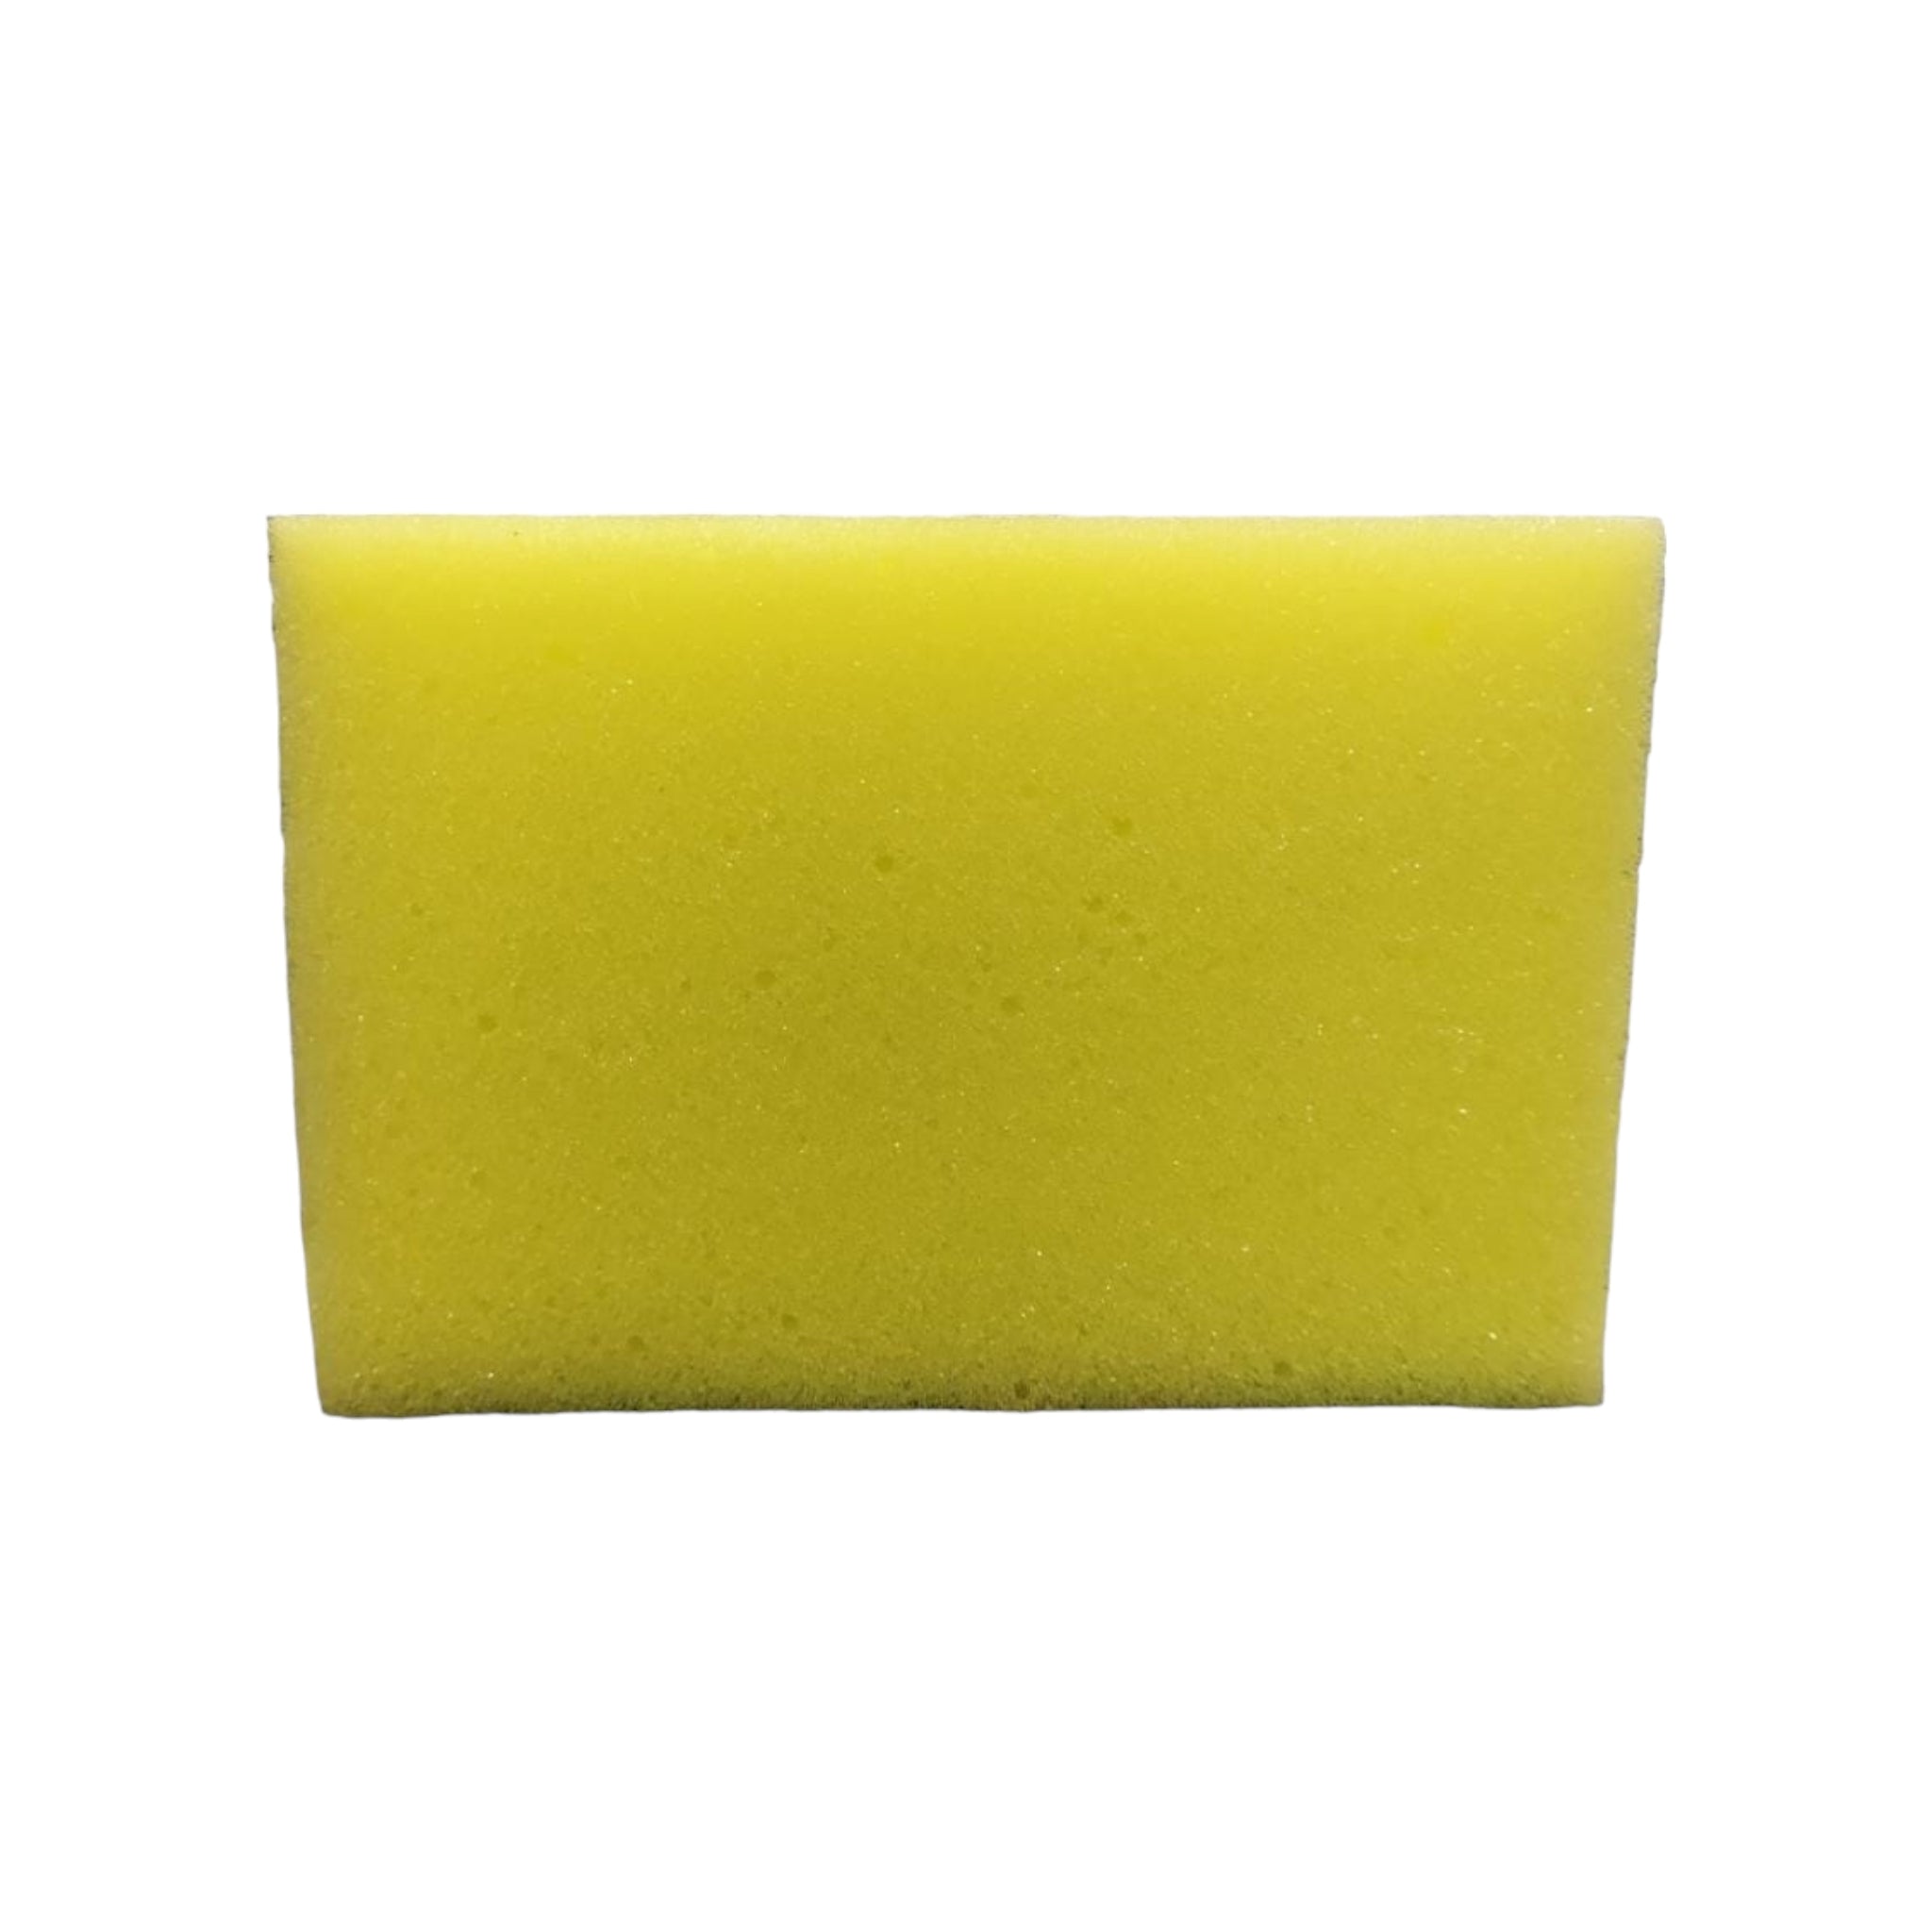 Painters Sponge Small Yellow F1140 Academy